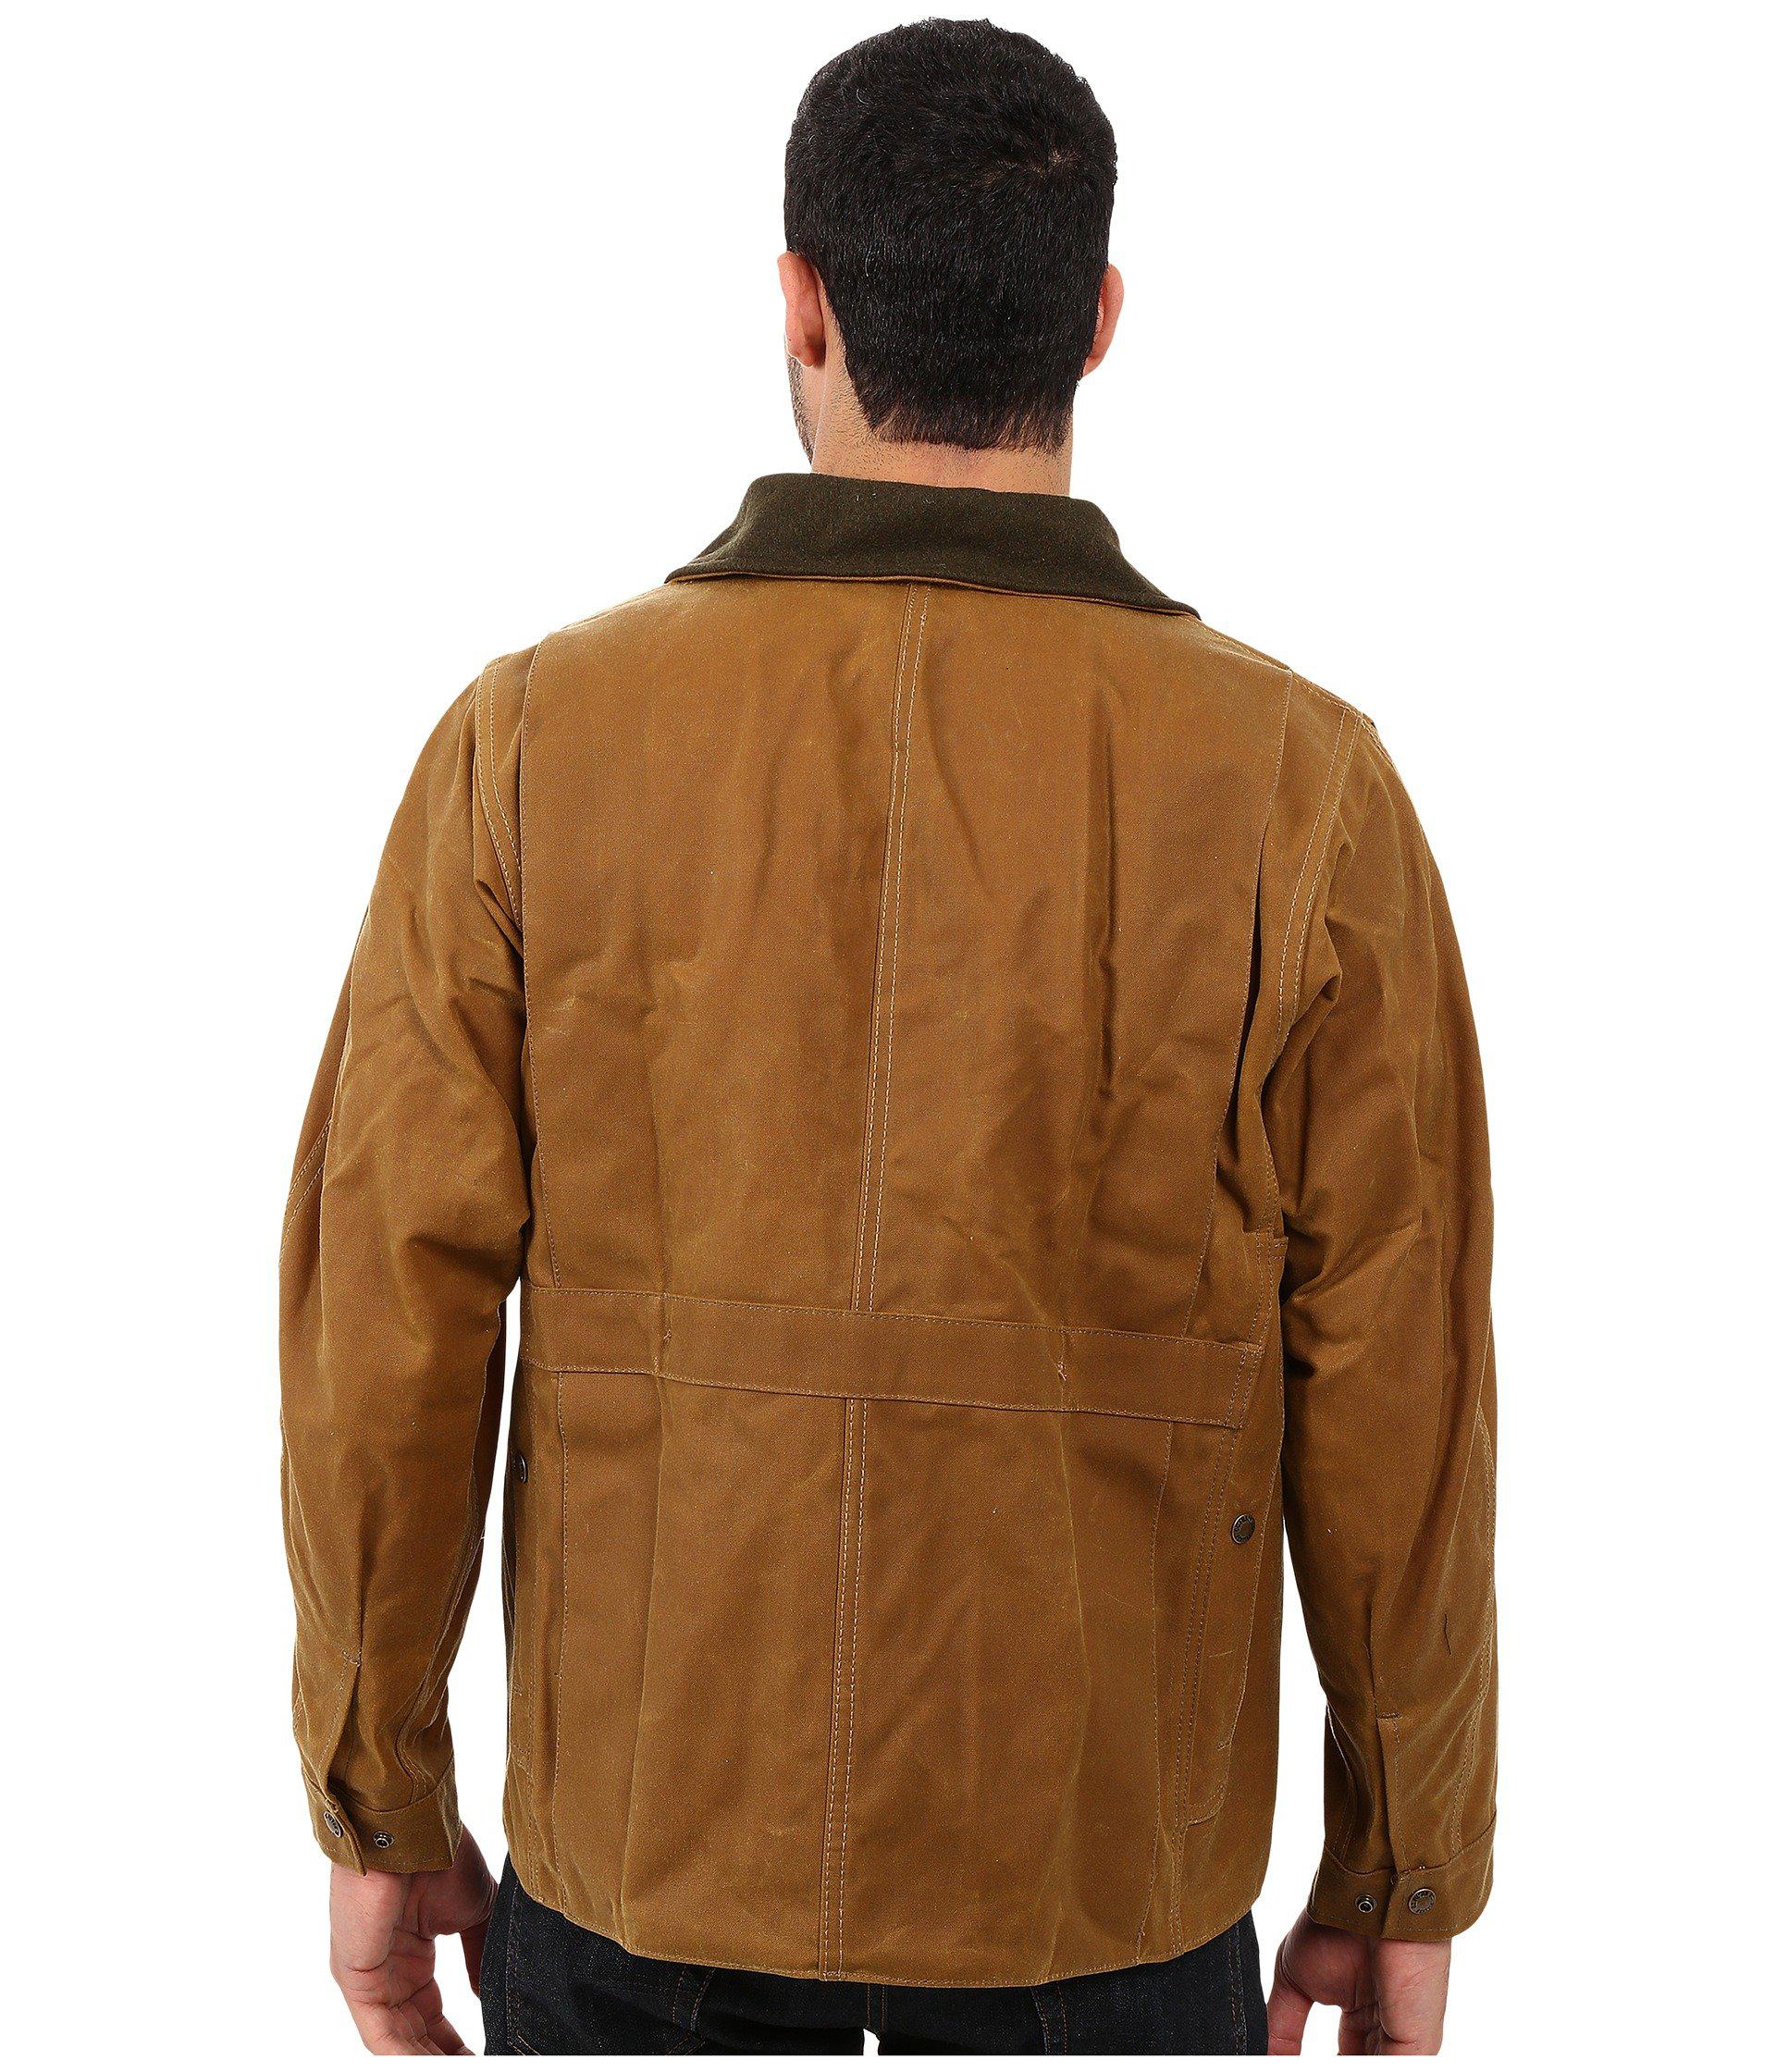 Filson Wool Tin Cloth Field Coat in Tan (Brown) for Men - Lyst